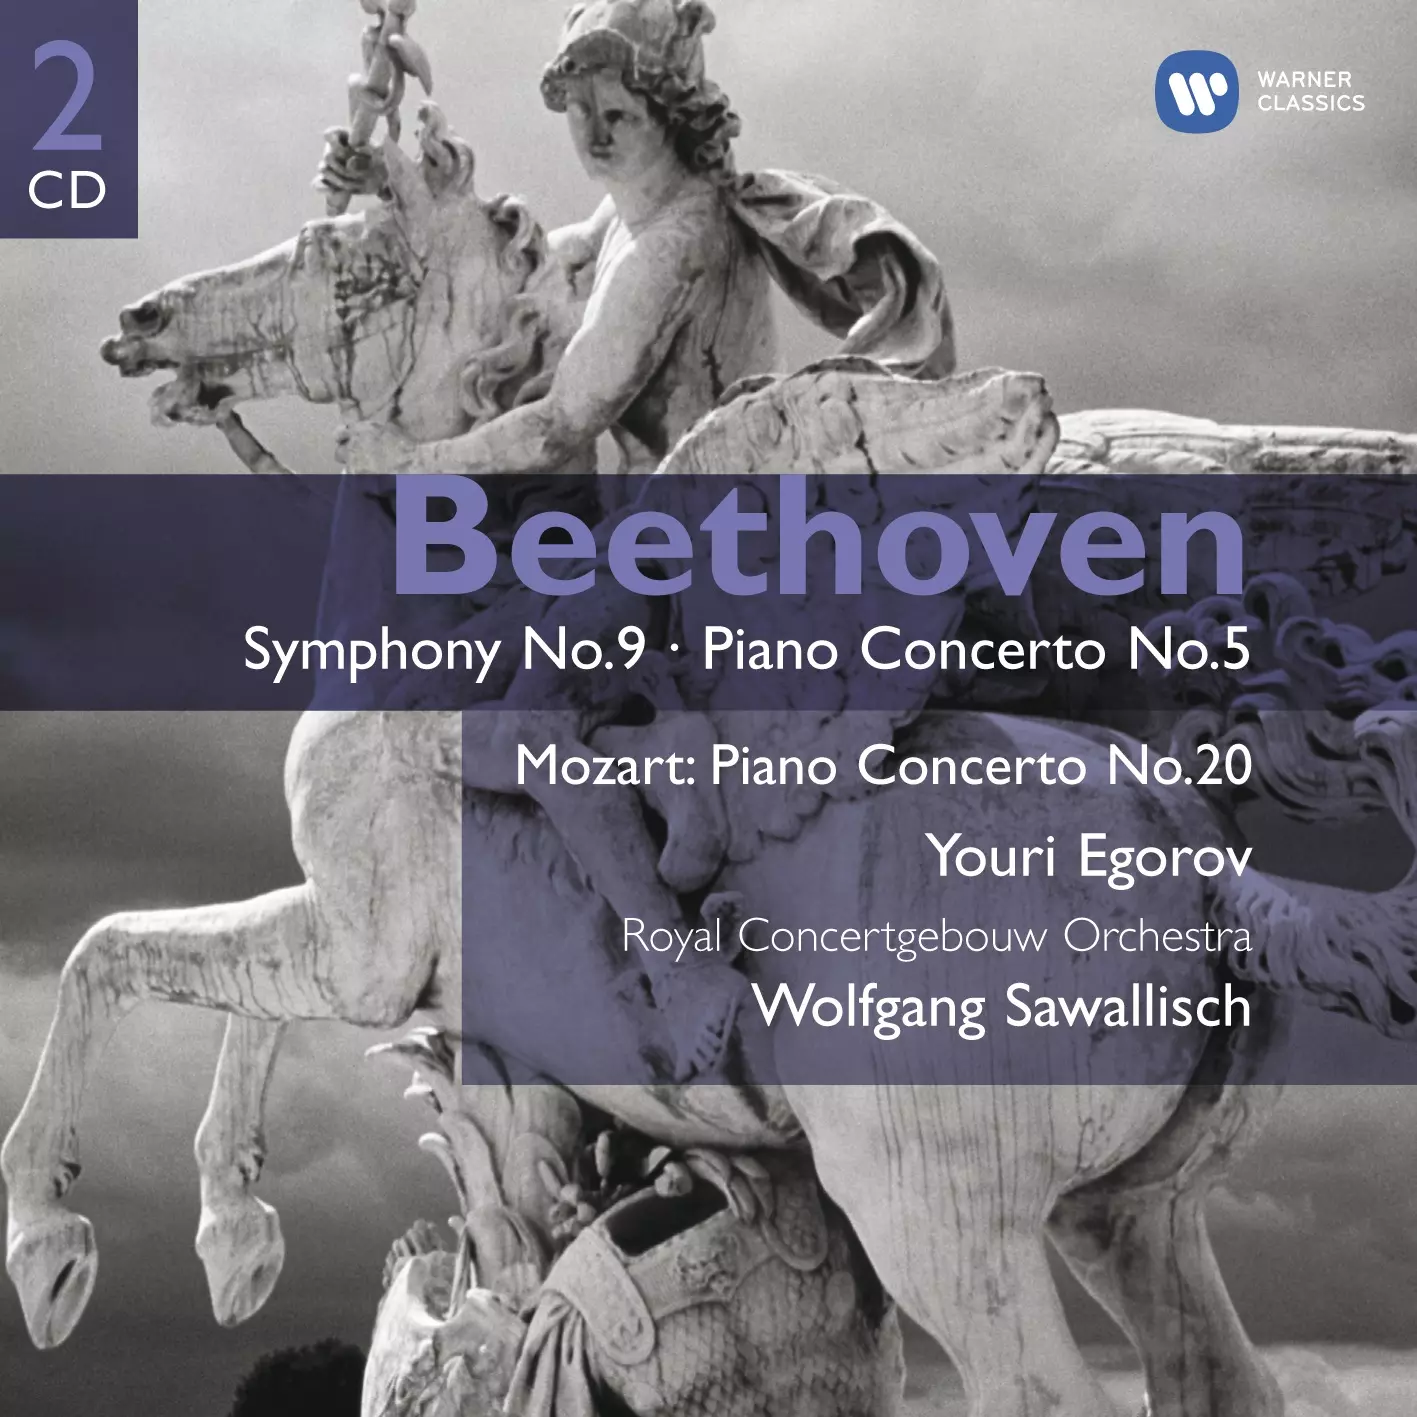 Beethoven: Symphony No. 9 - Piano Concerto No. 5